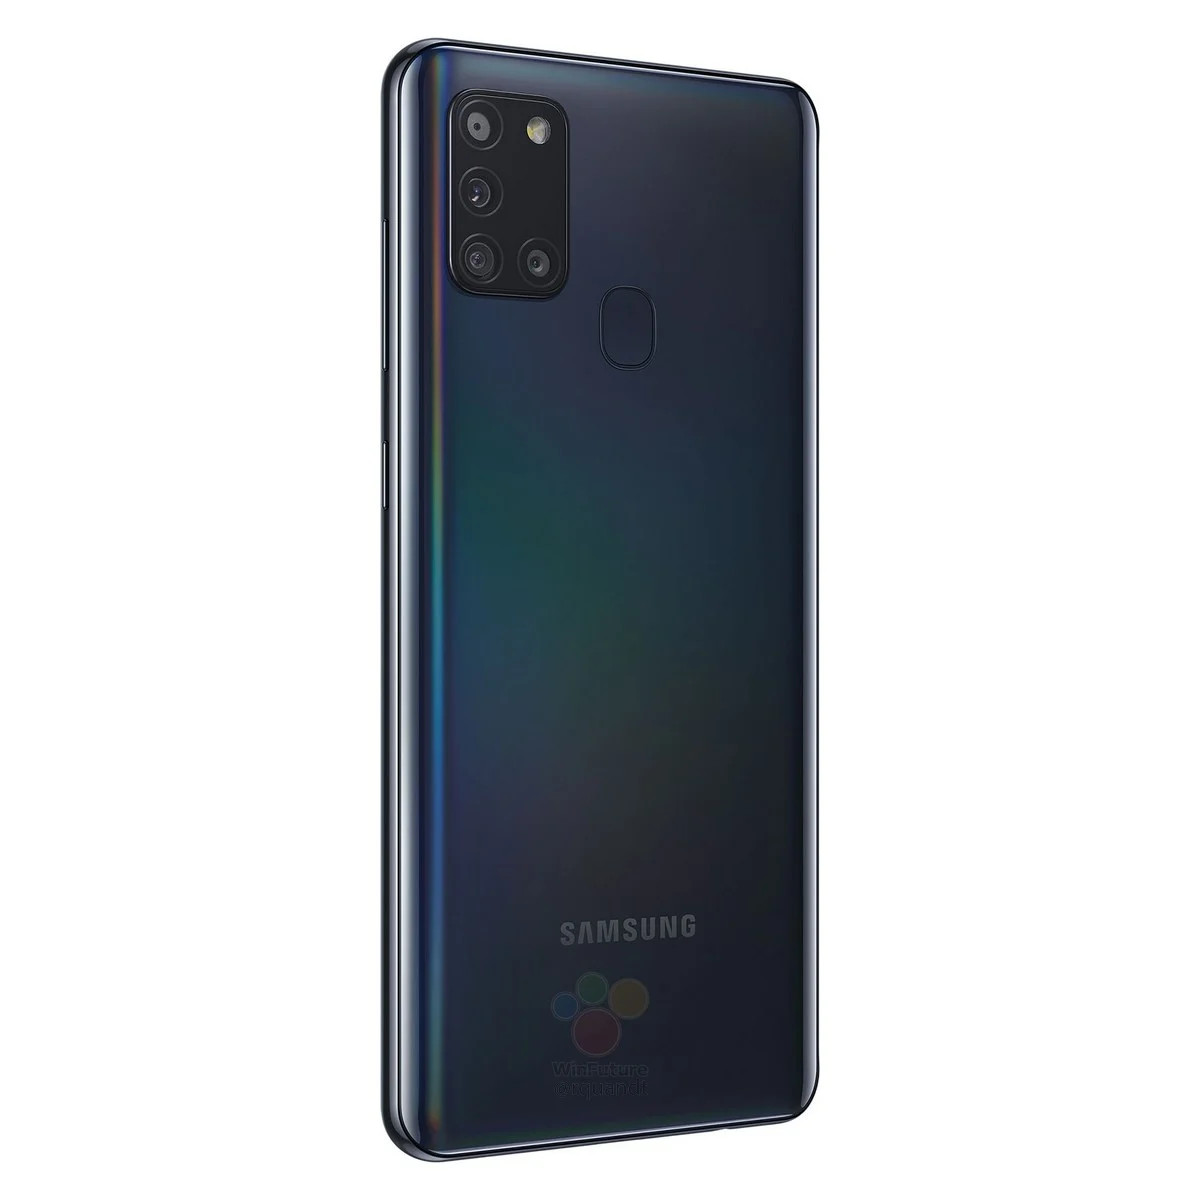 Samsung-Galaxy-A21s-1589366096-0-0.jpg